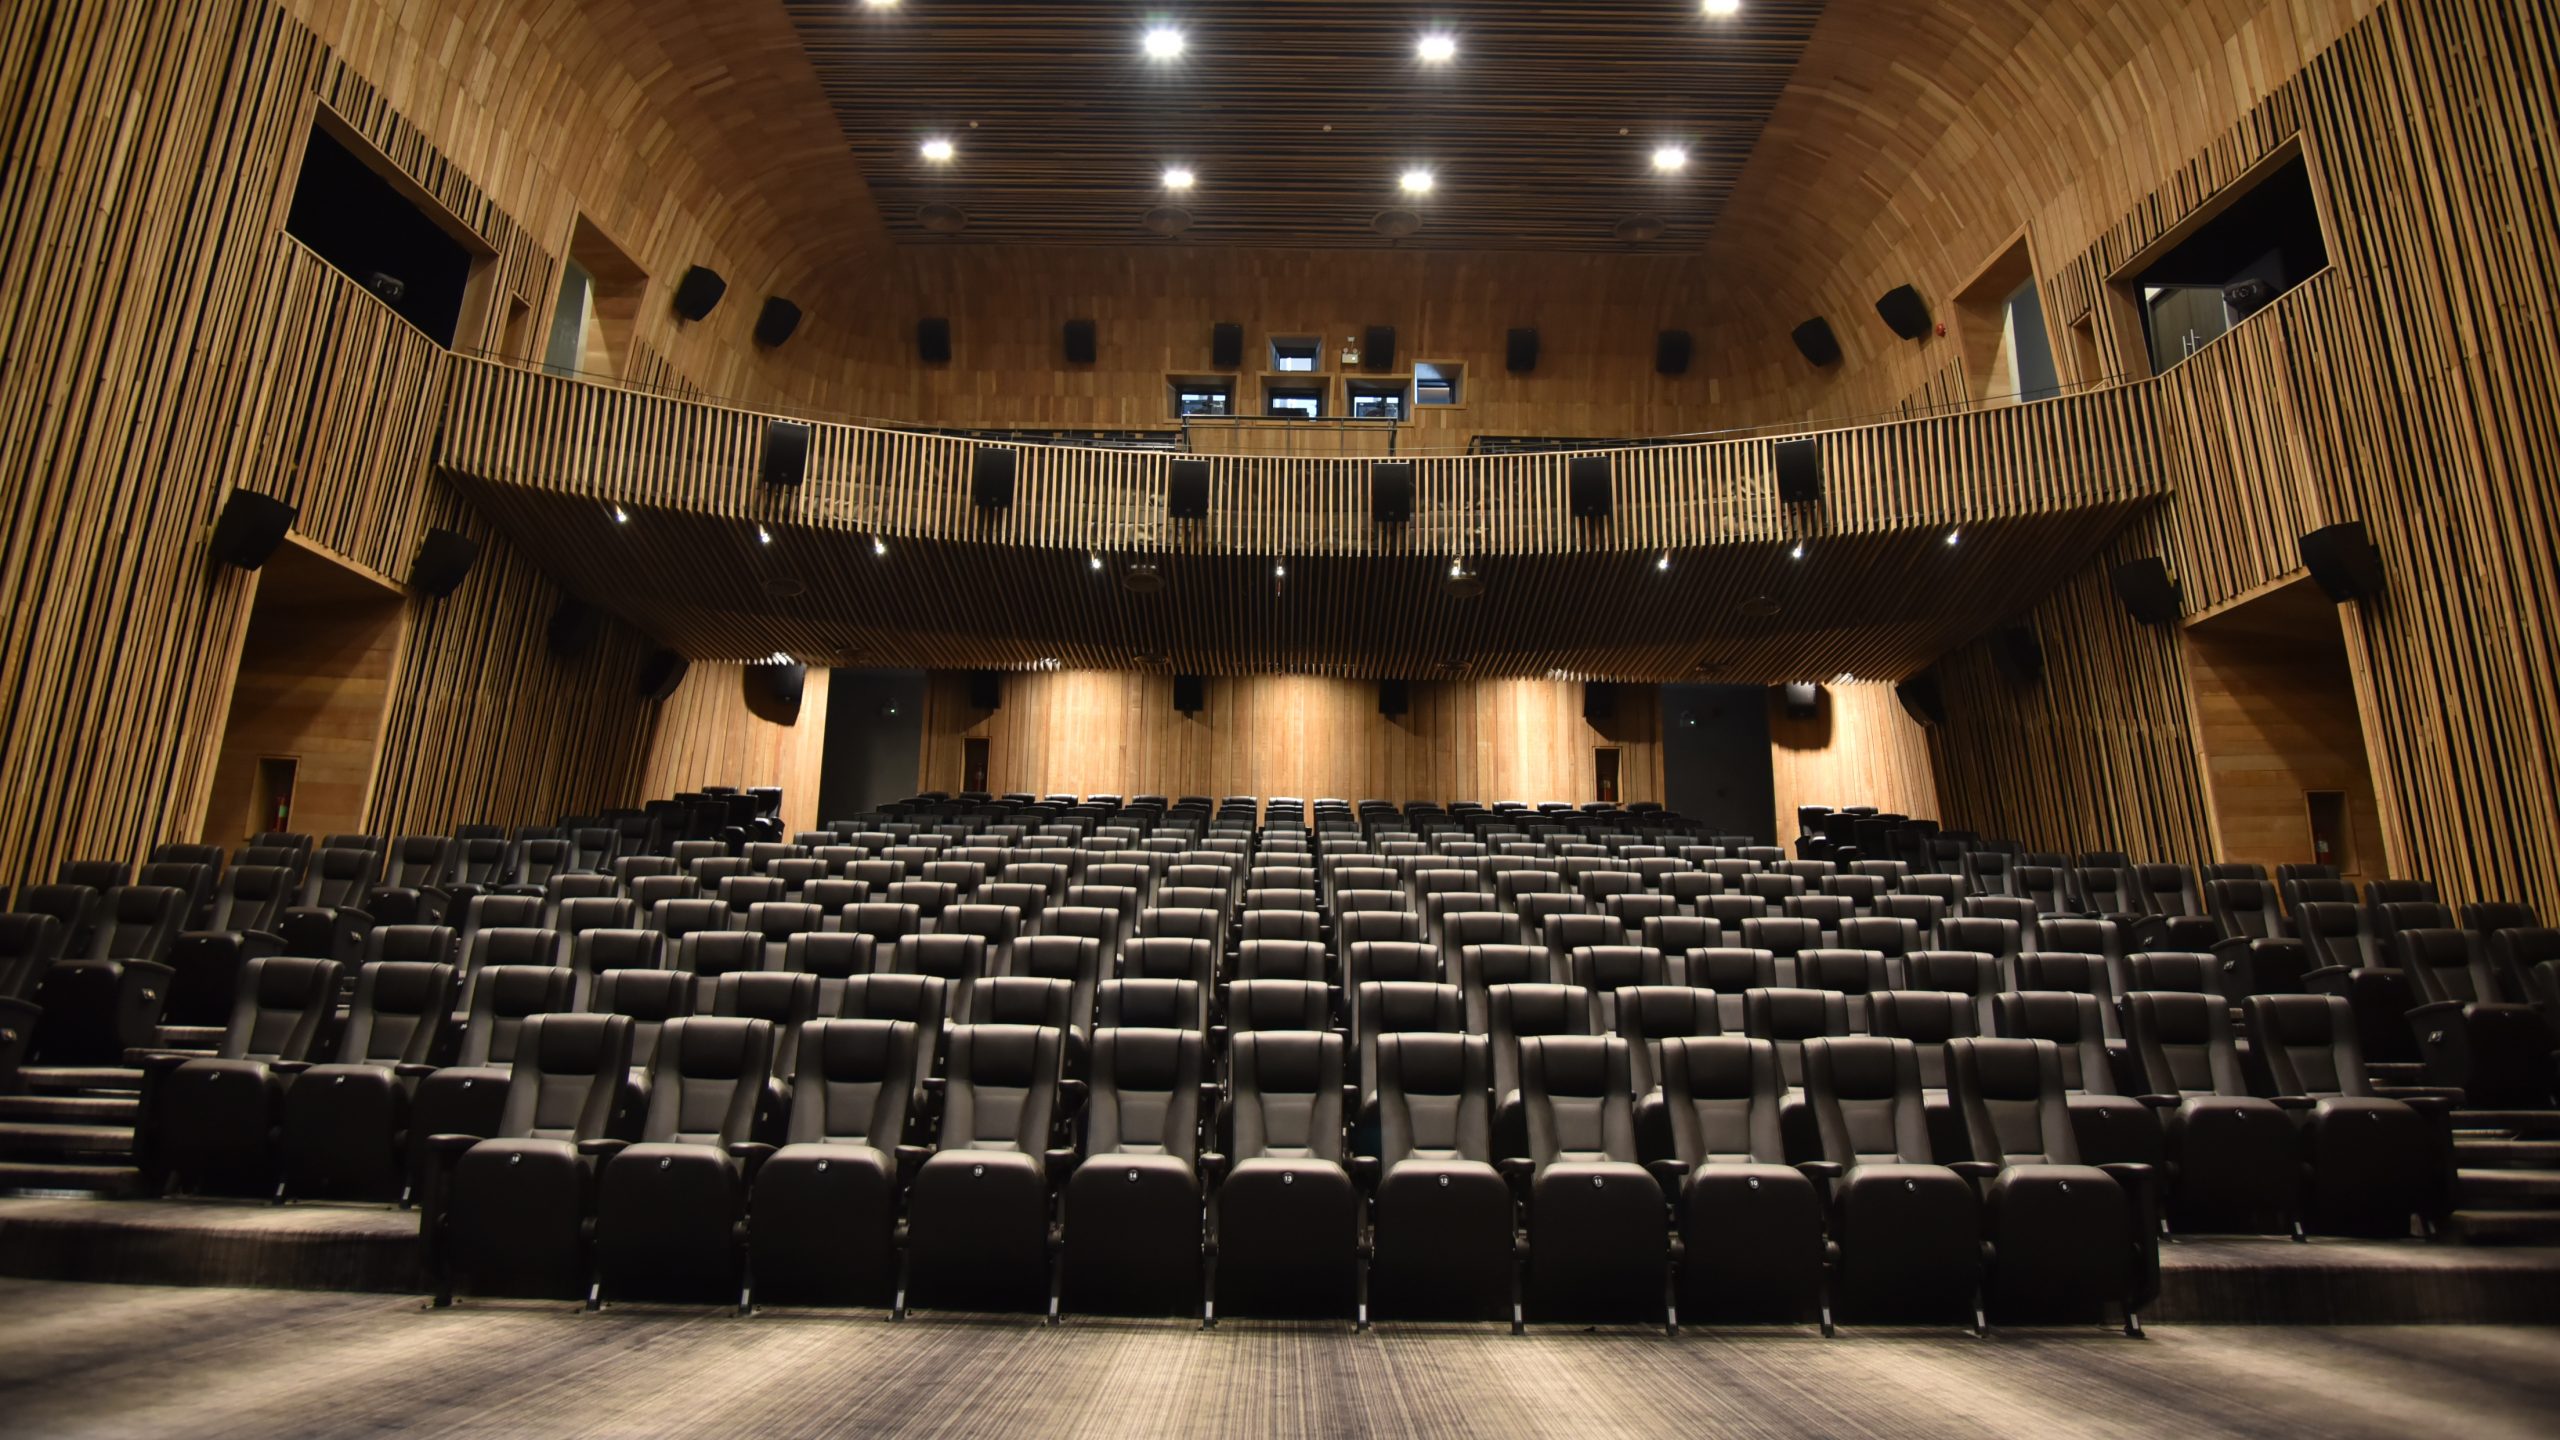 photograph of a large auditorium